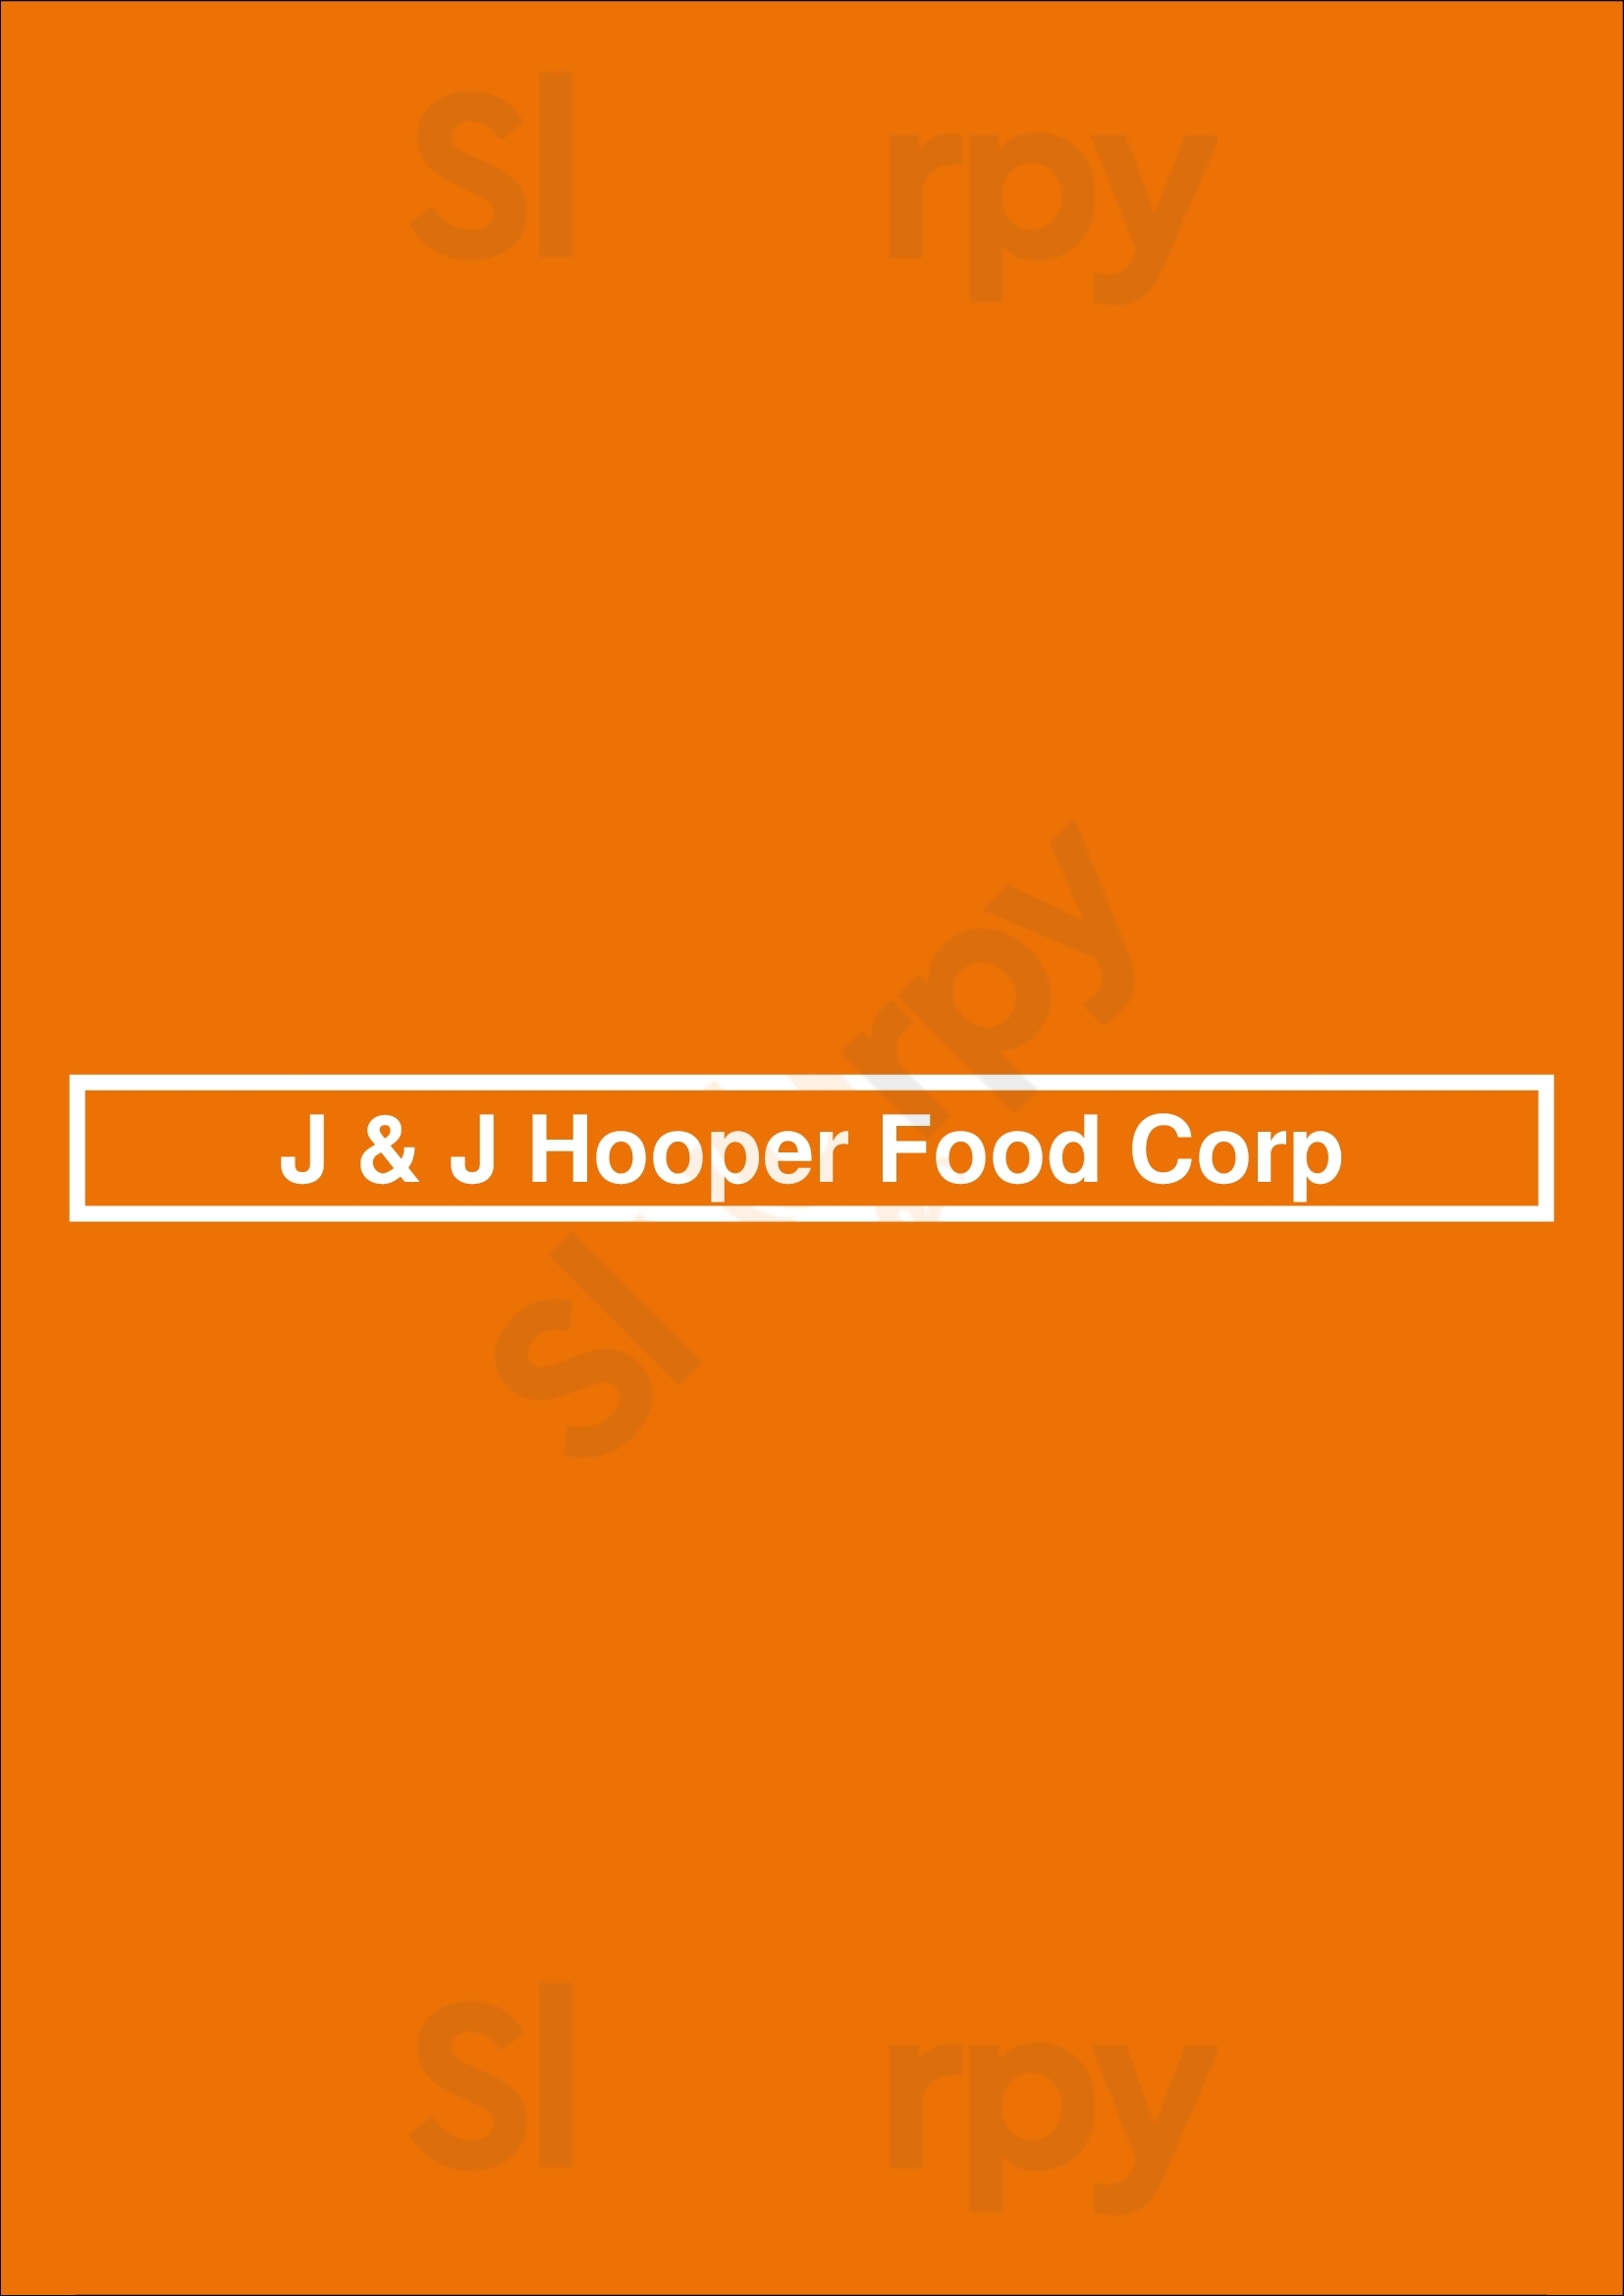 J & J Hooper Food Corp Brooklyn Menu - 1